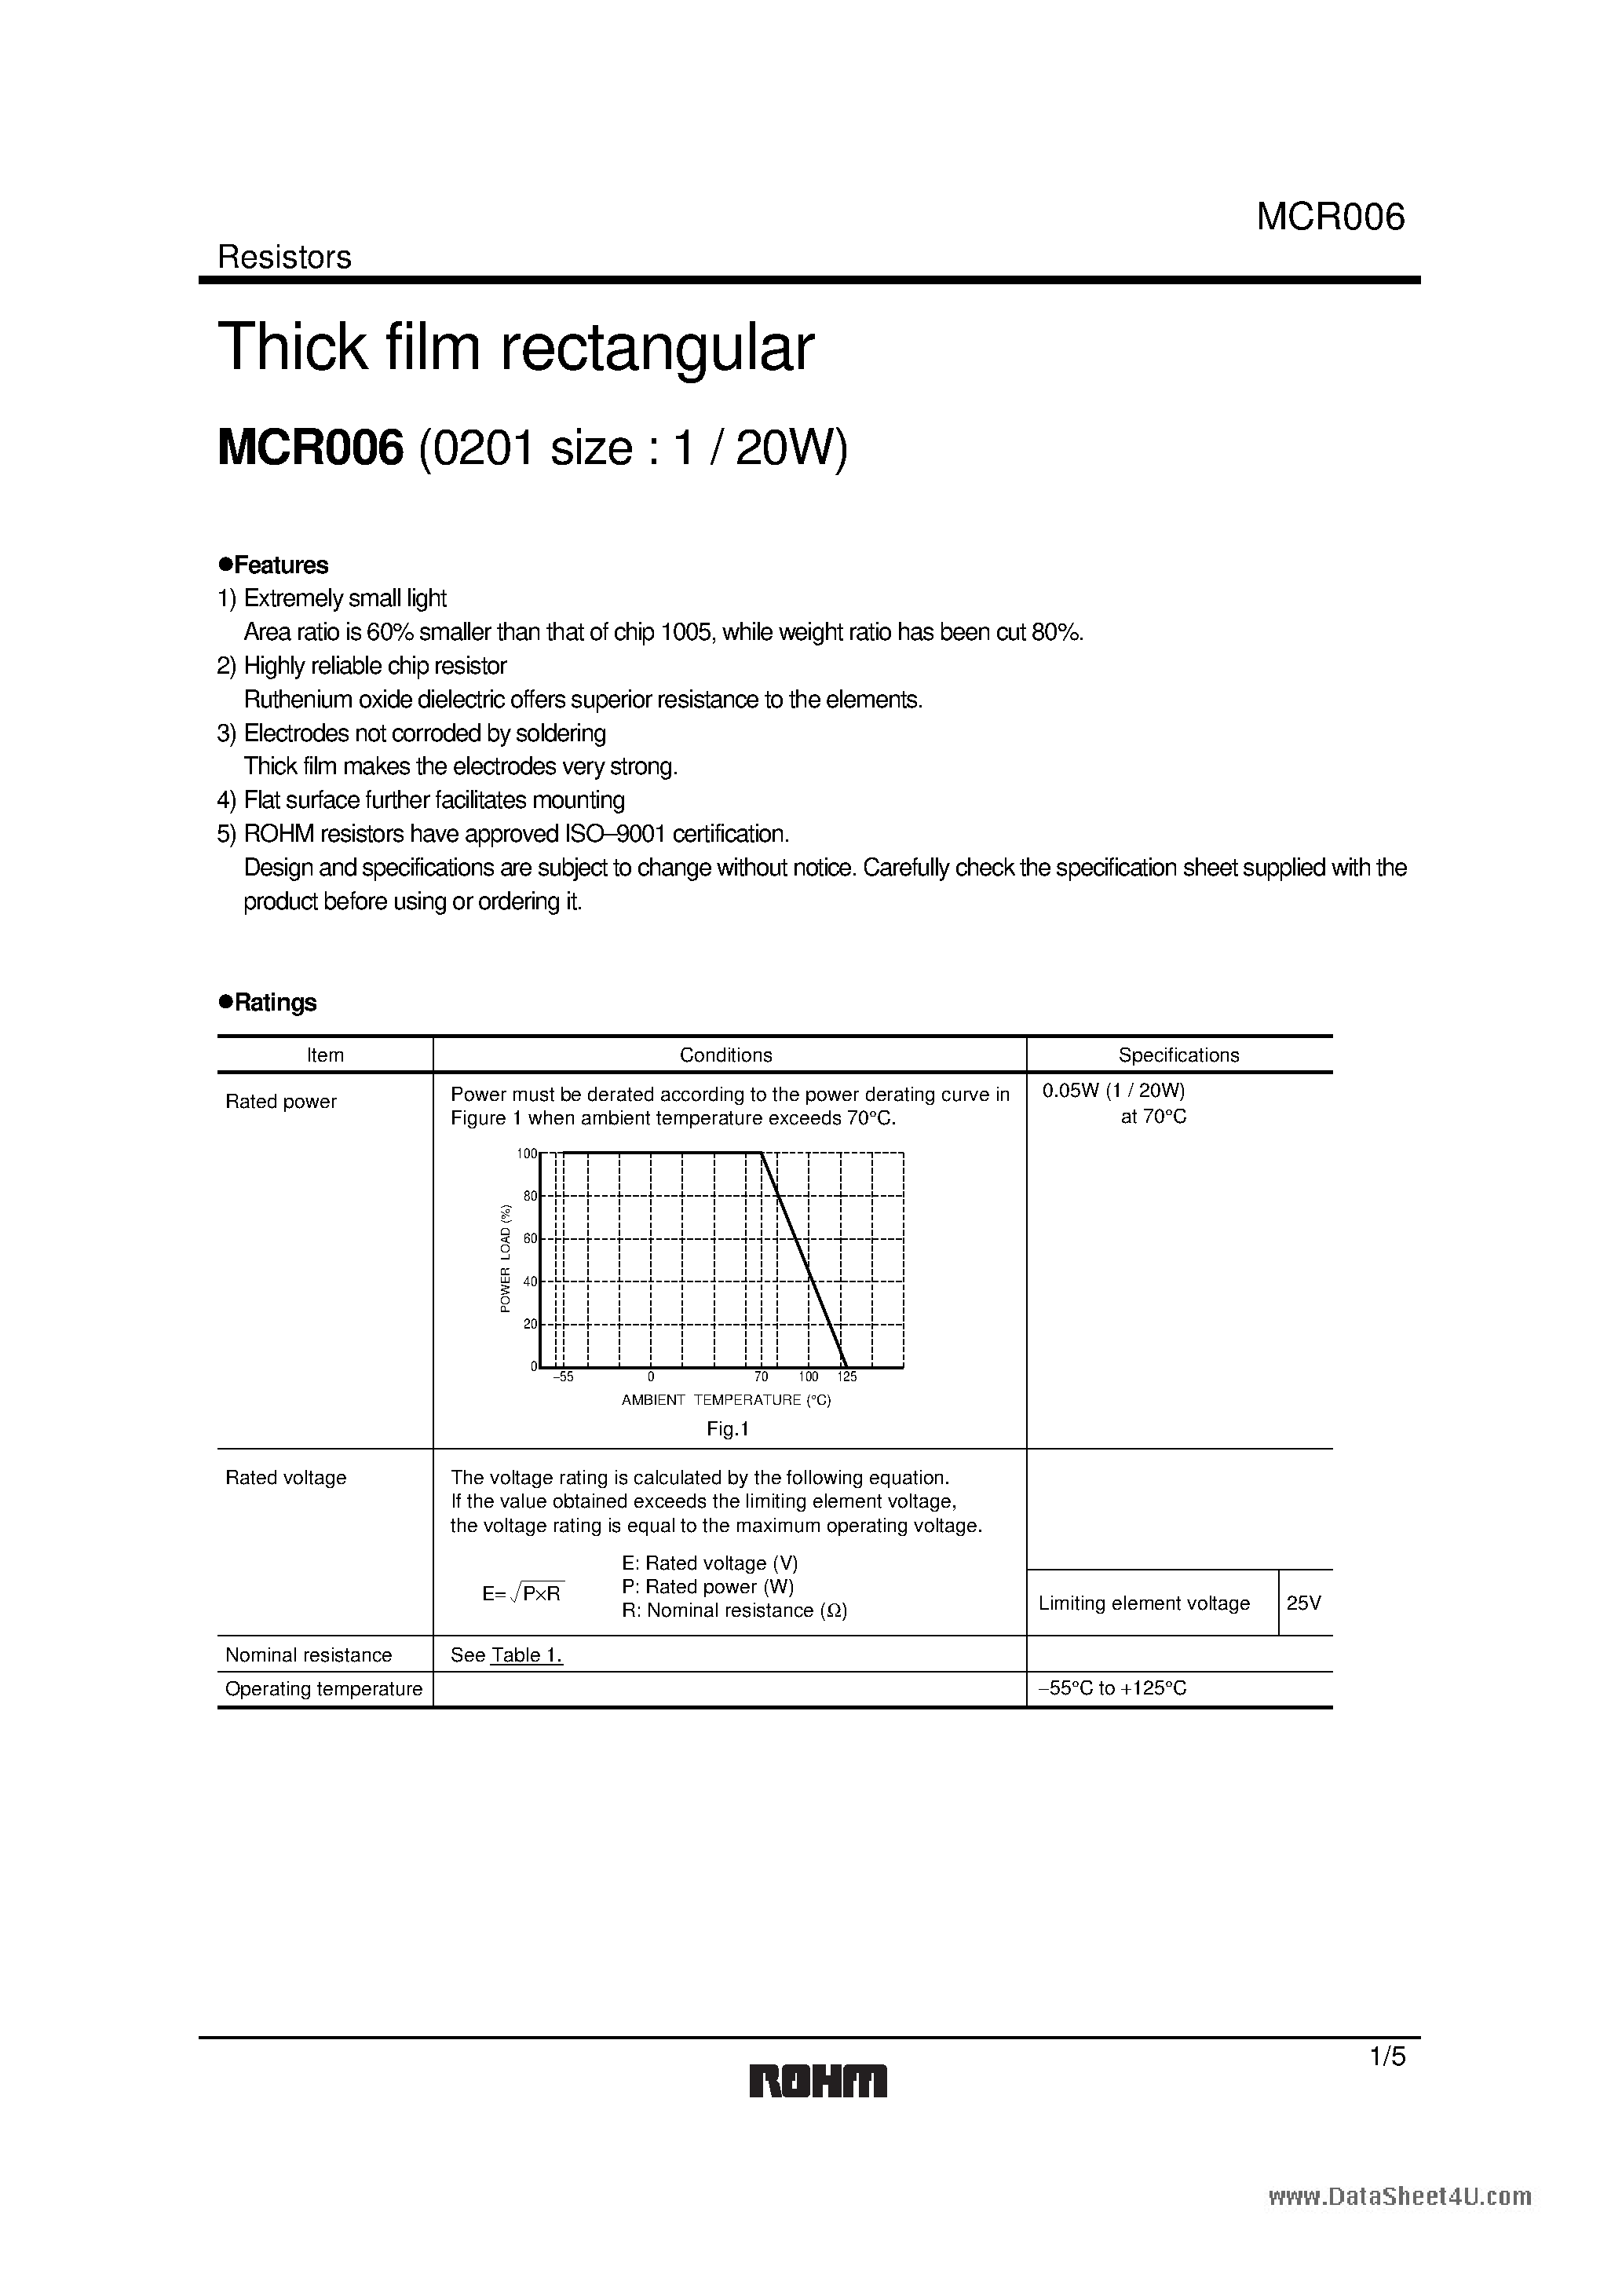 Datasheet MCR006 - Thick film rectangular page 1